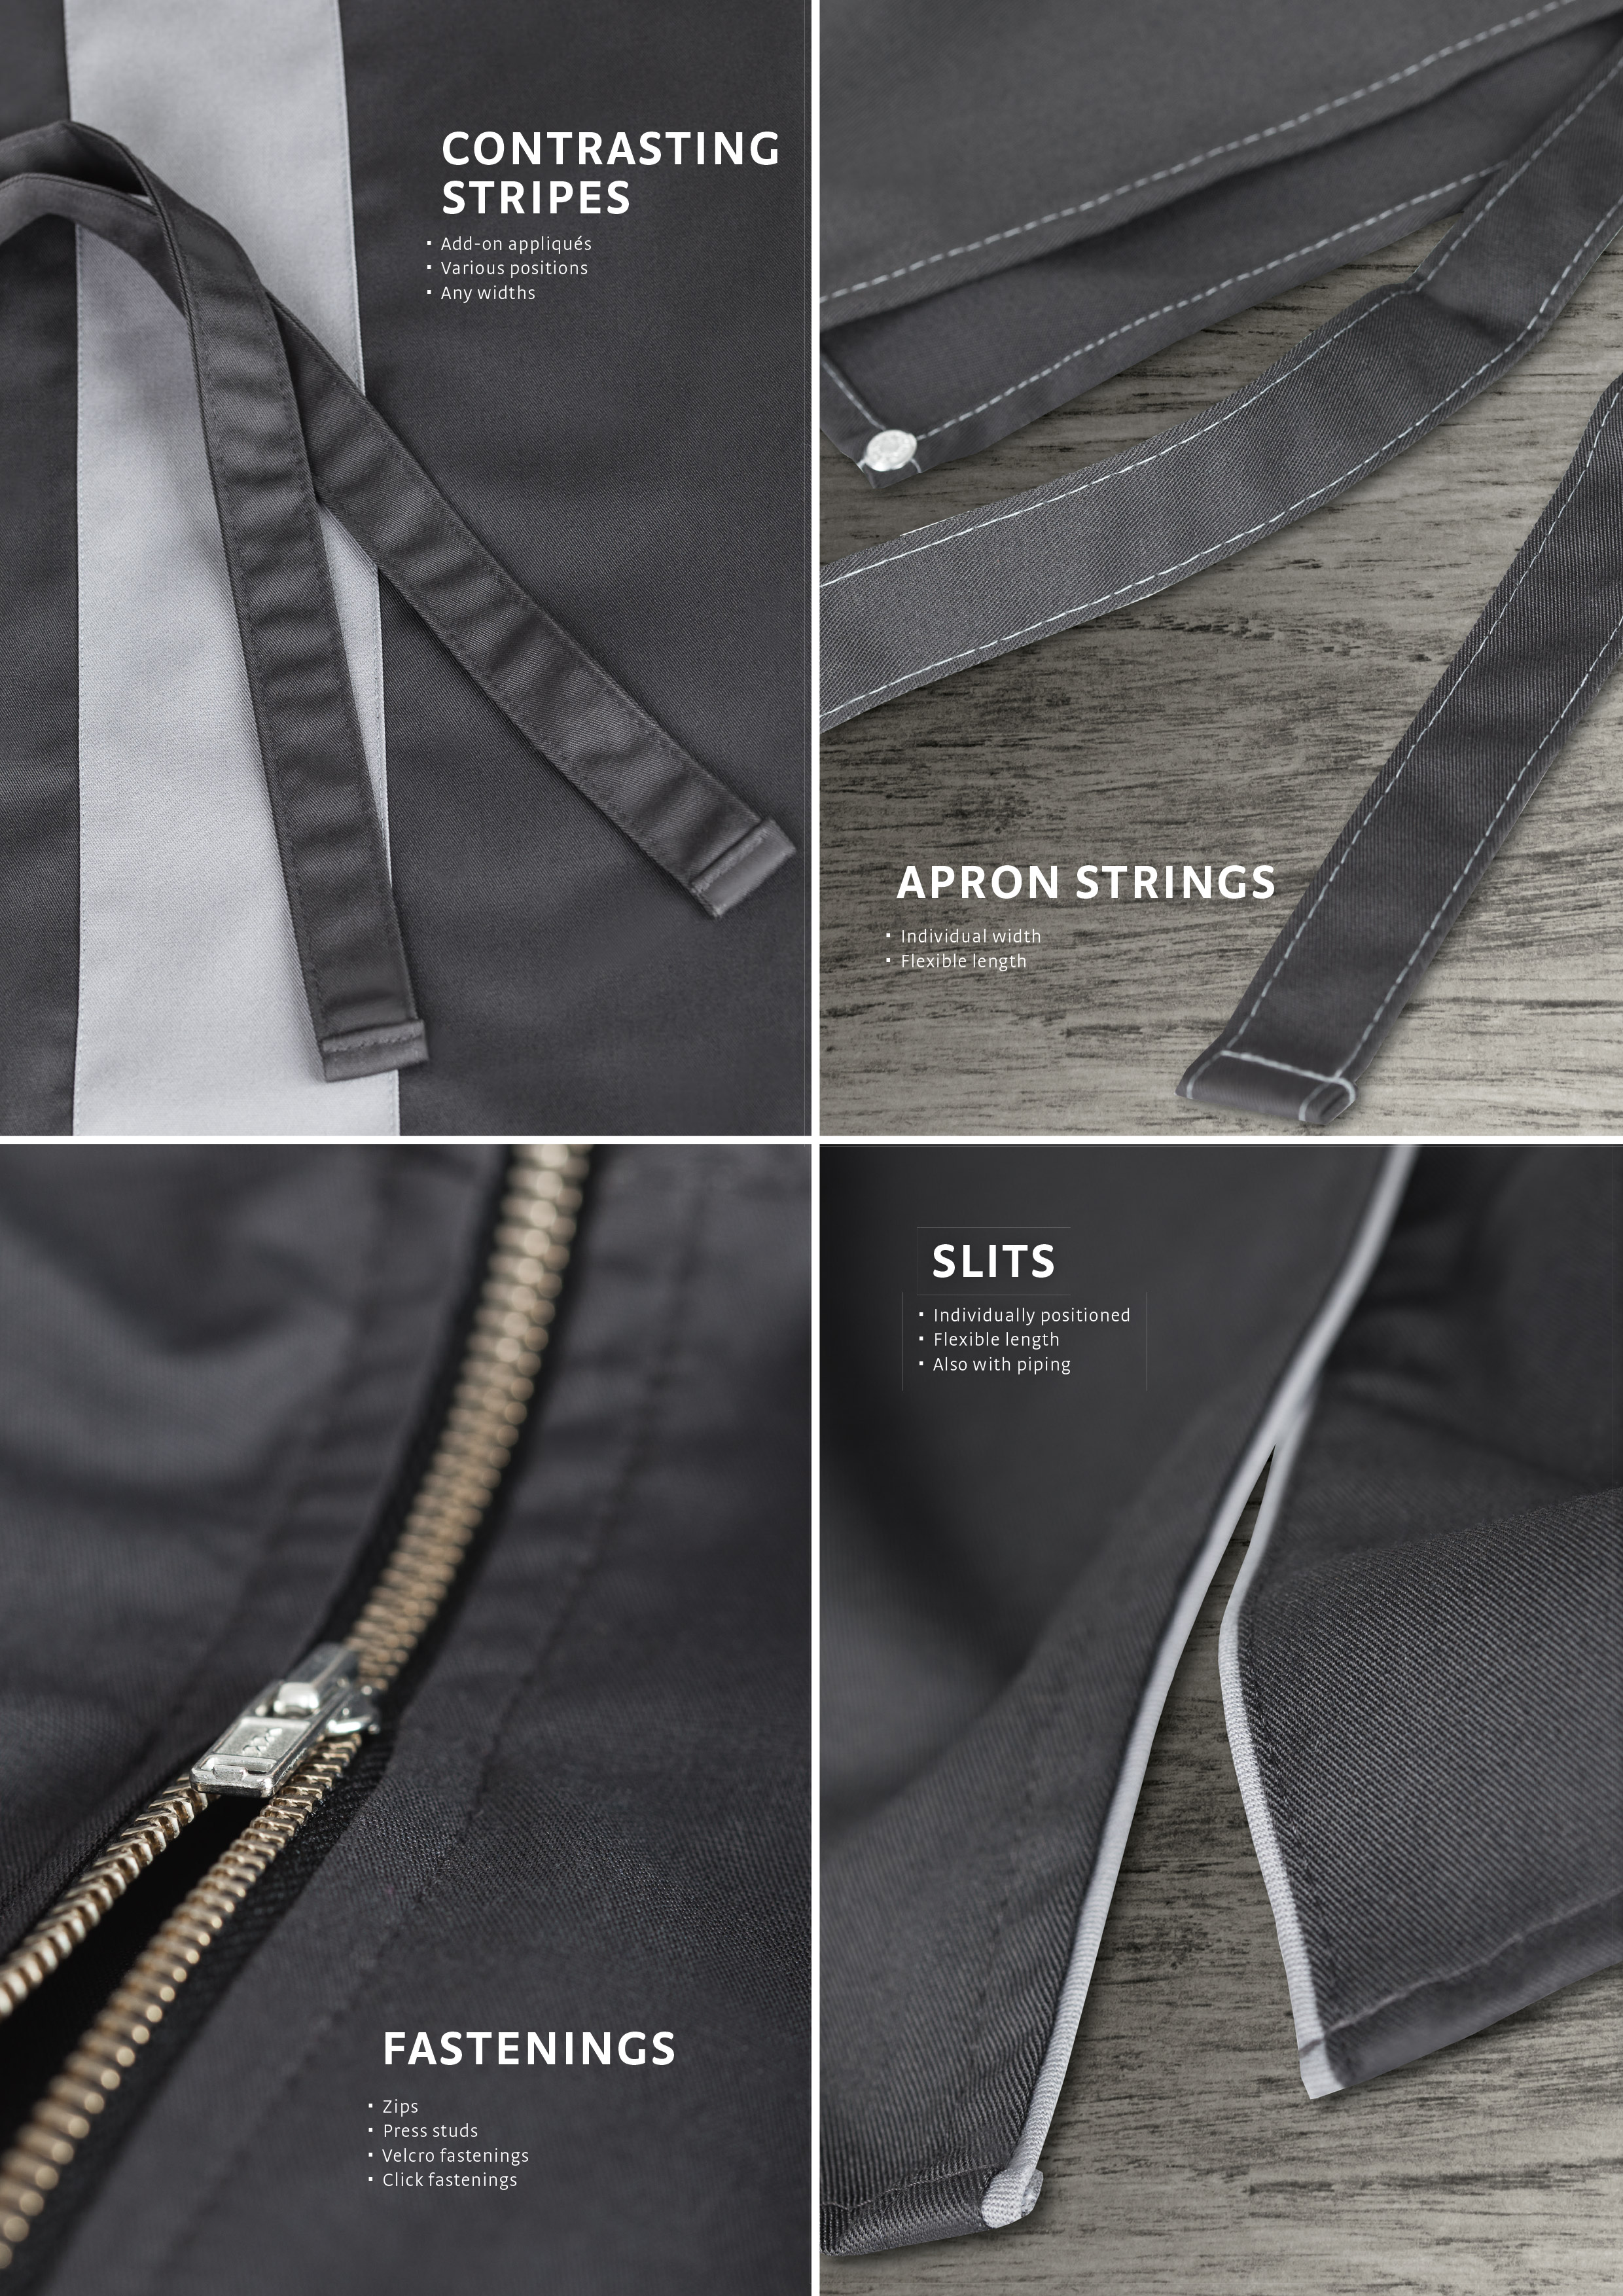 Design Freedom Contrasting Stripes-Apron Strings-Fastenings-Slits